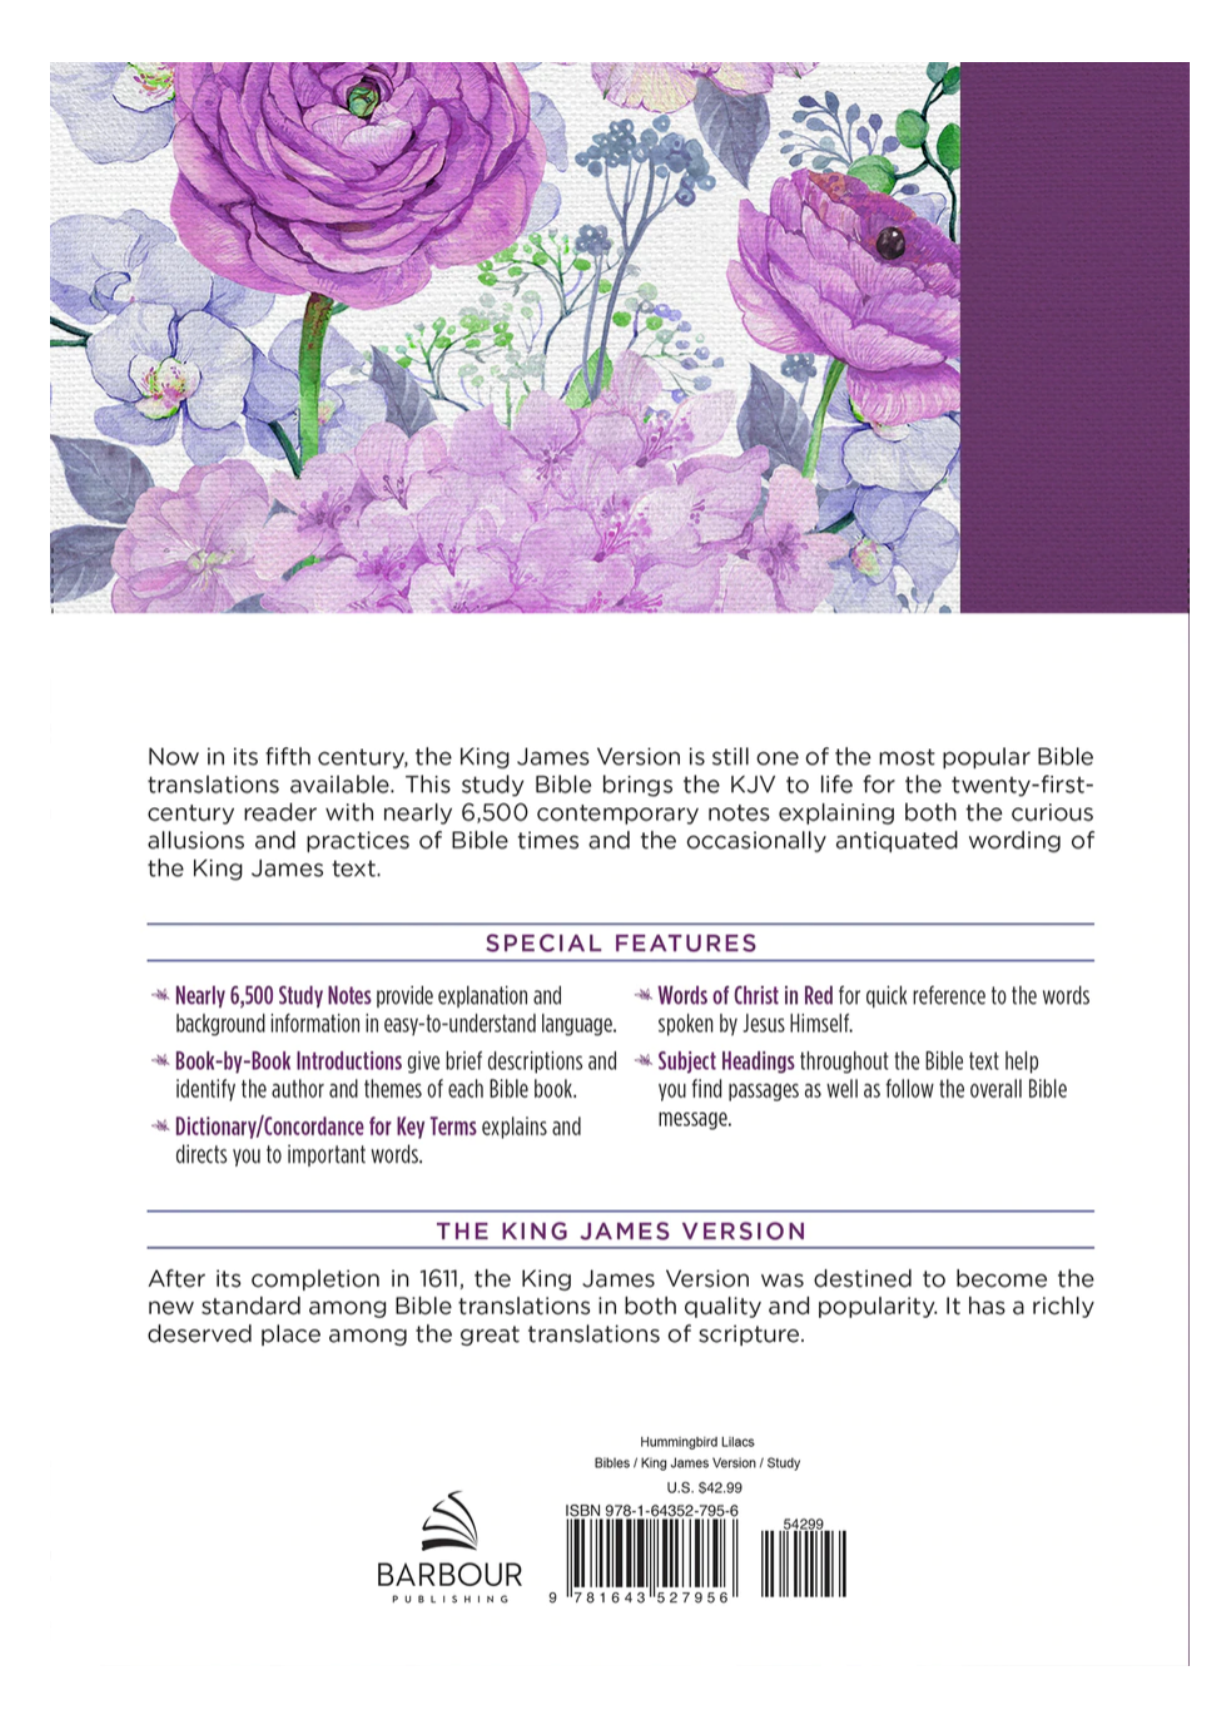 KJV Floral Large Print Study Bible Home & Lifestyle